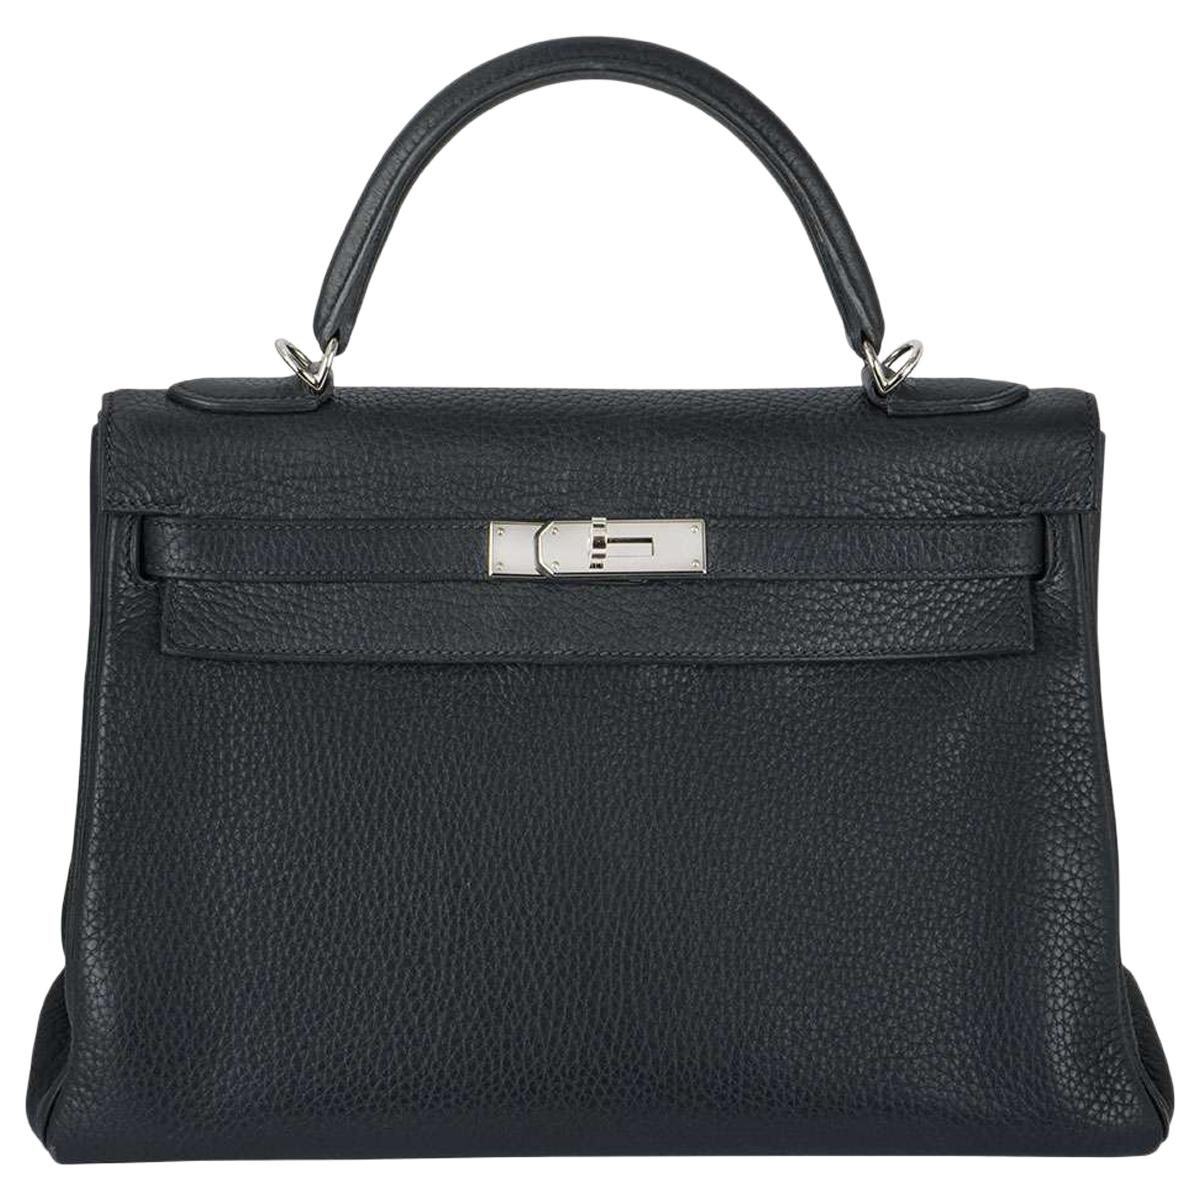 Hermes 32 cm Kelly handbag with original Fendi Strap